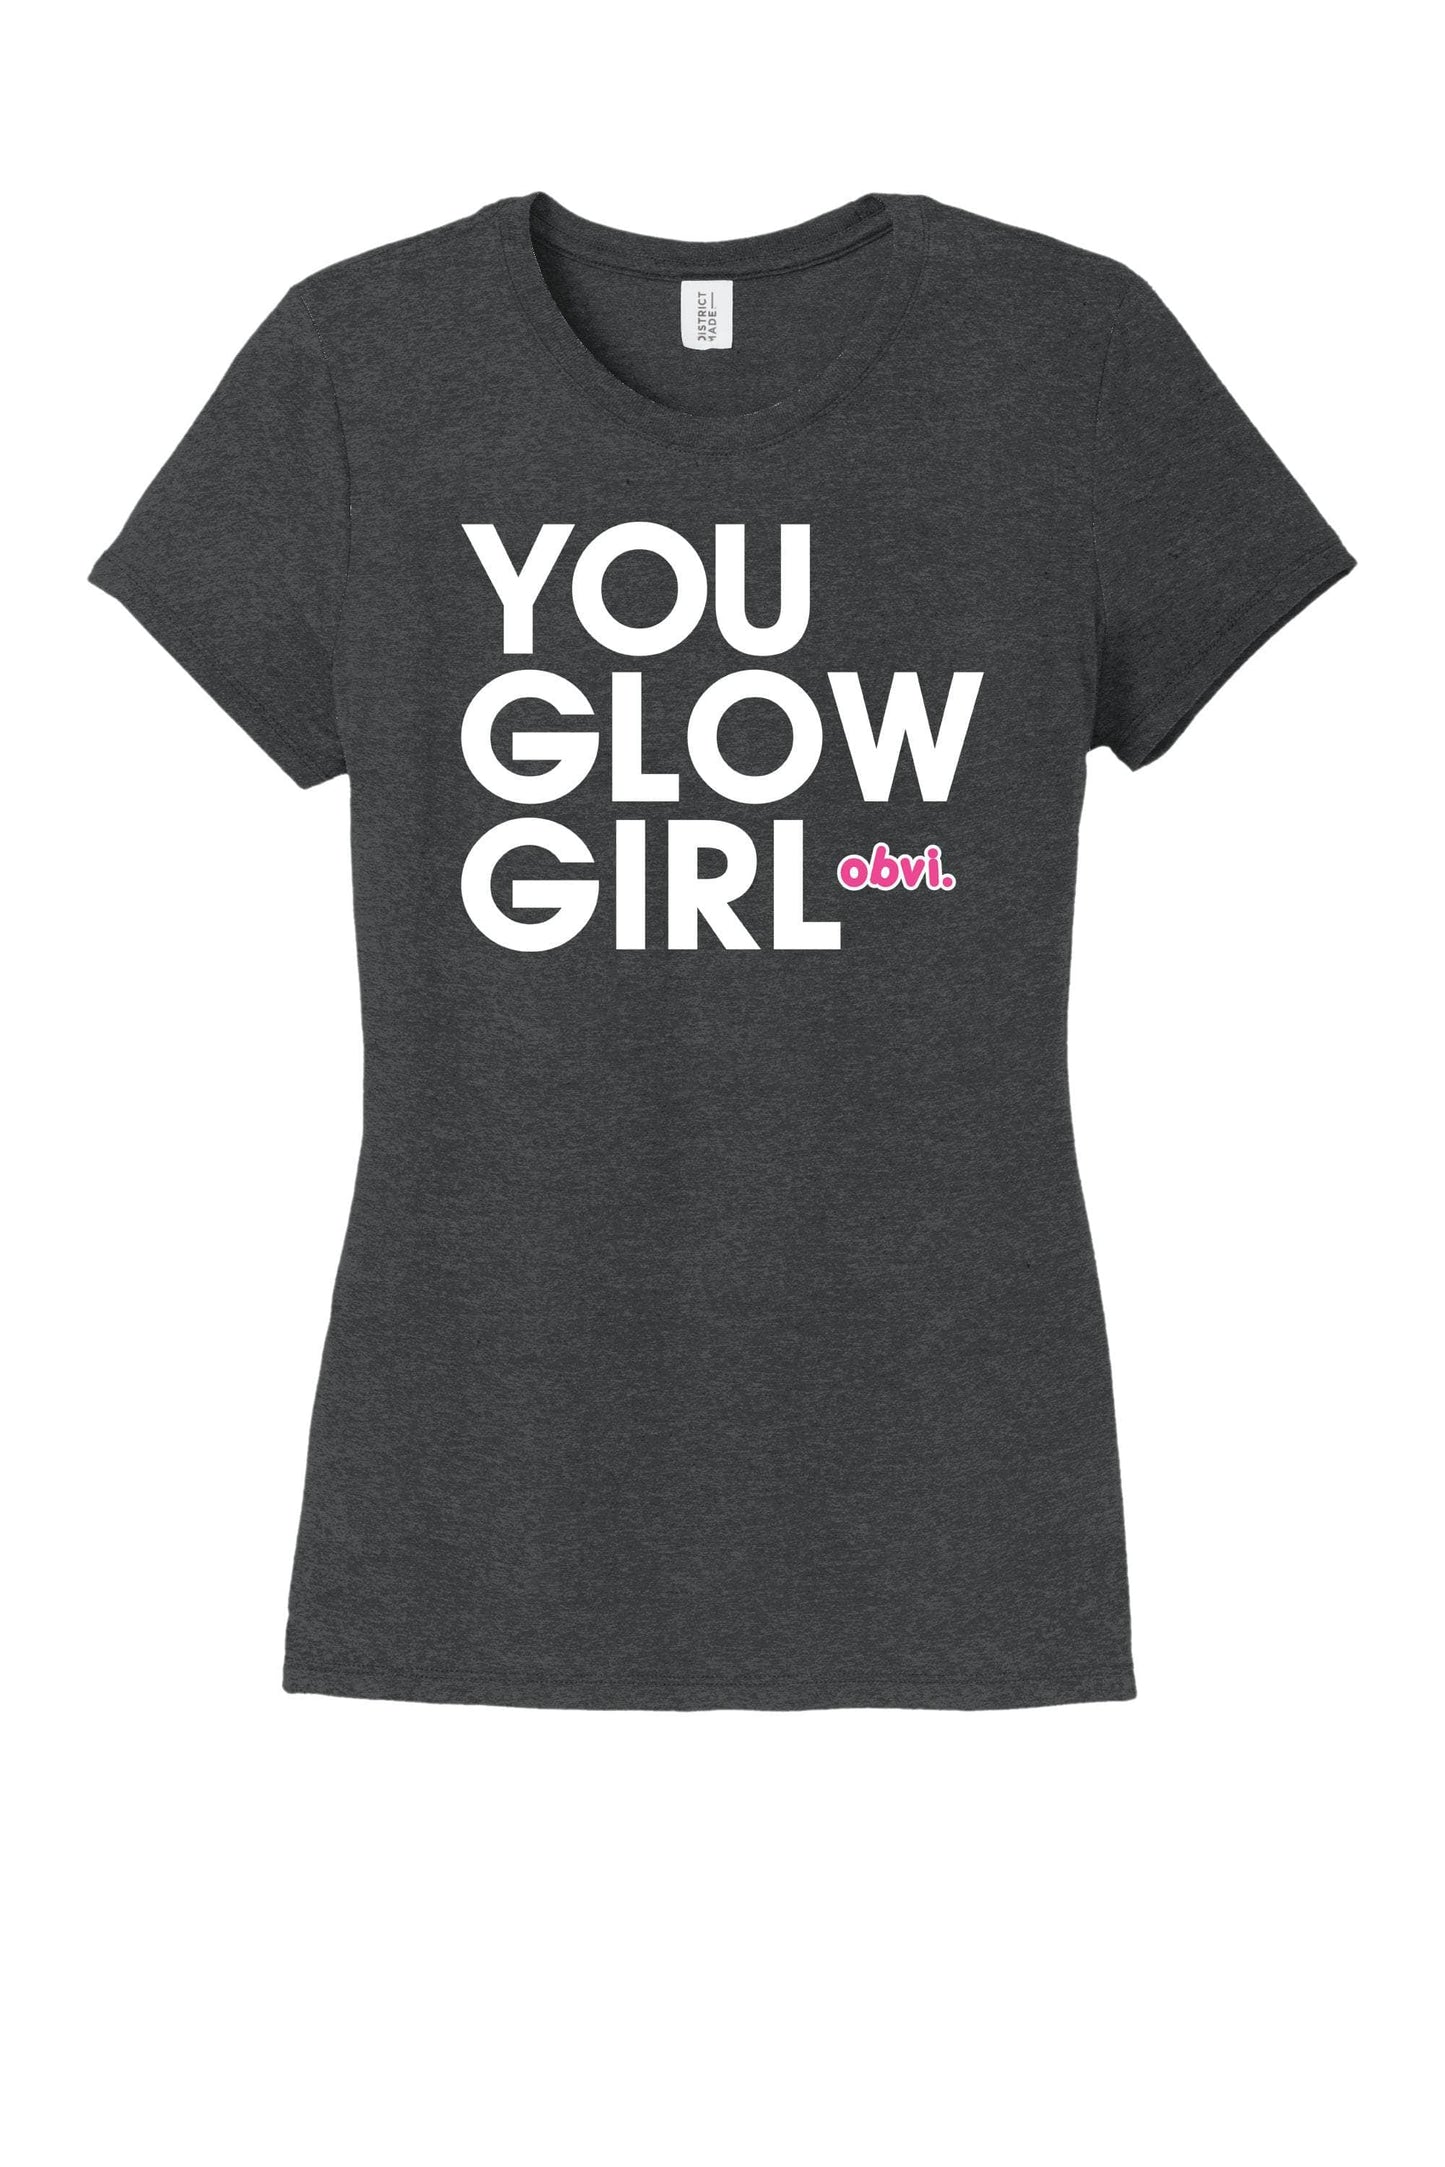 You Glow Girl!